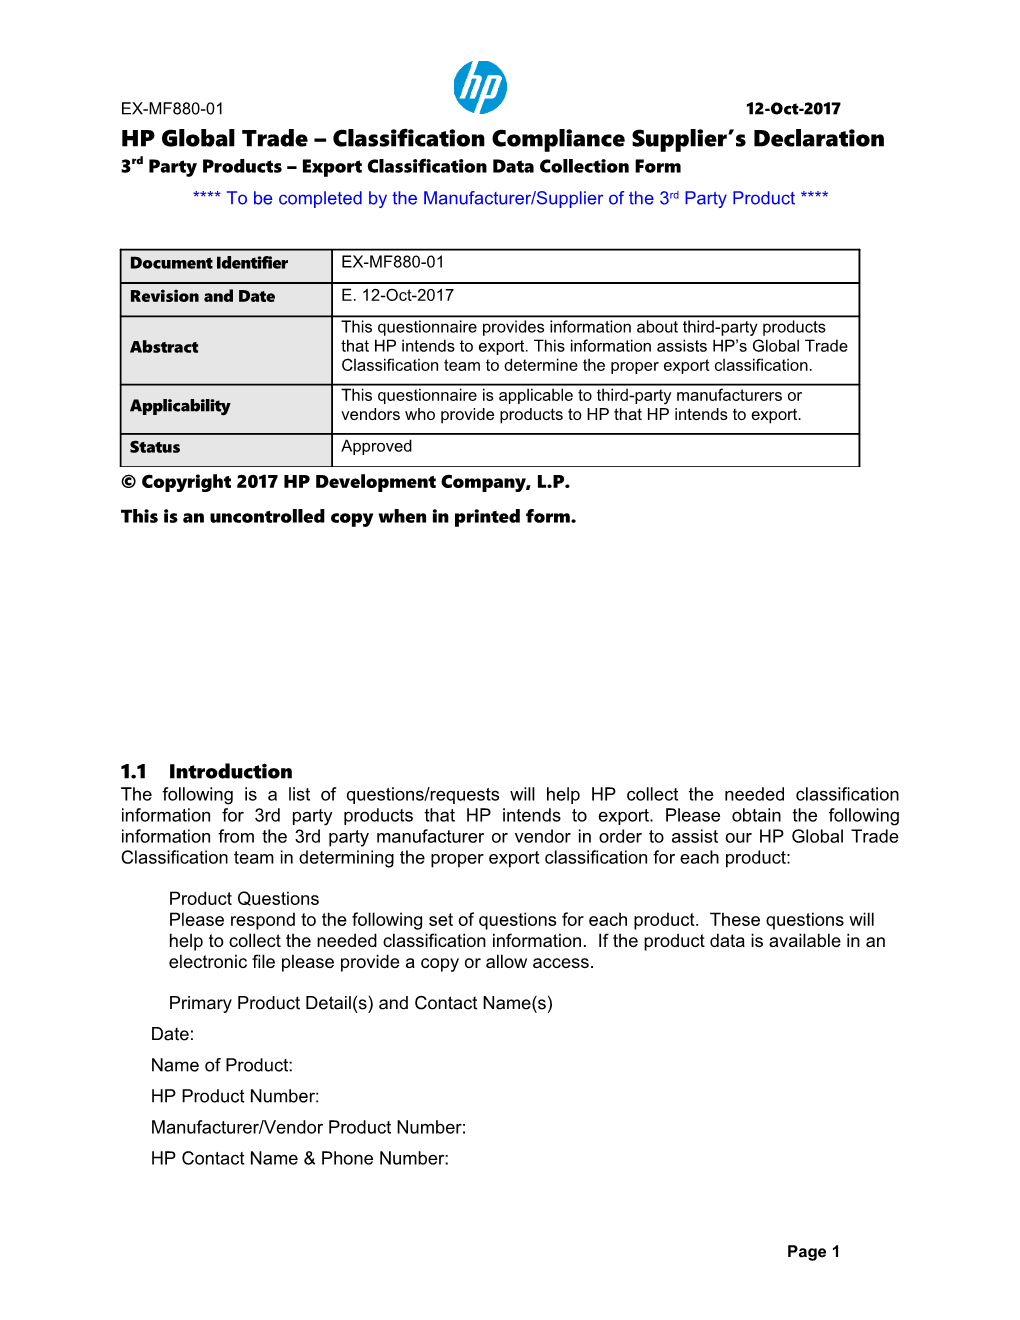 EL-MF880-01, HP Global Trade Classification Compliance Supplier S Declaration